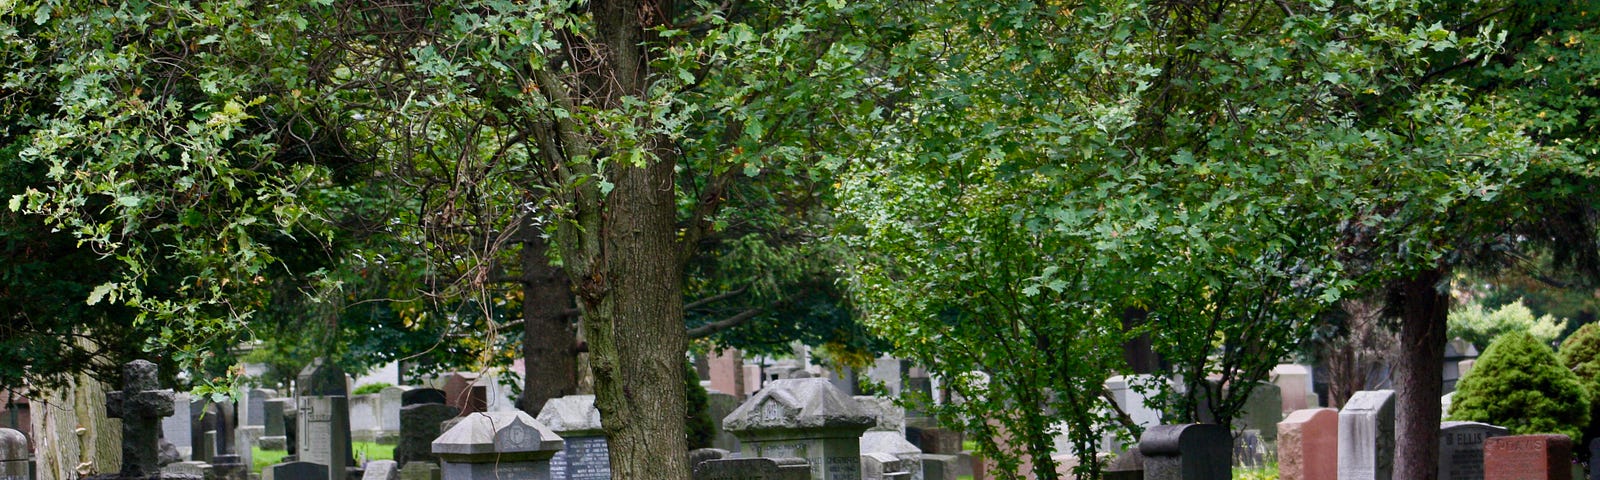 a graveyard scene. Gravestones under a tree